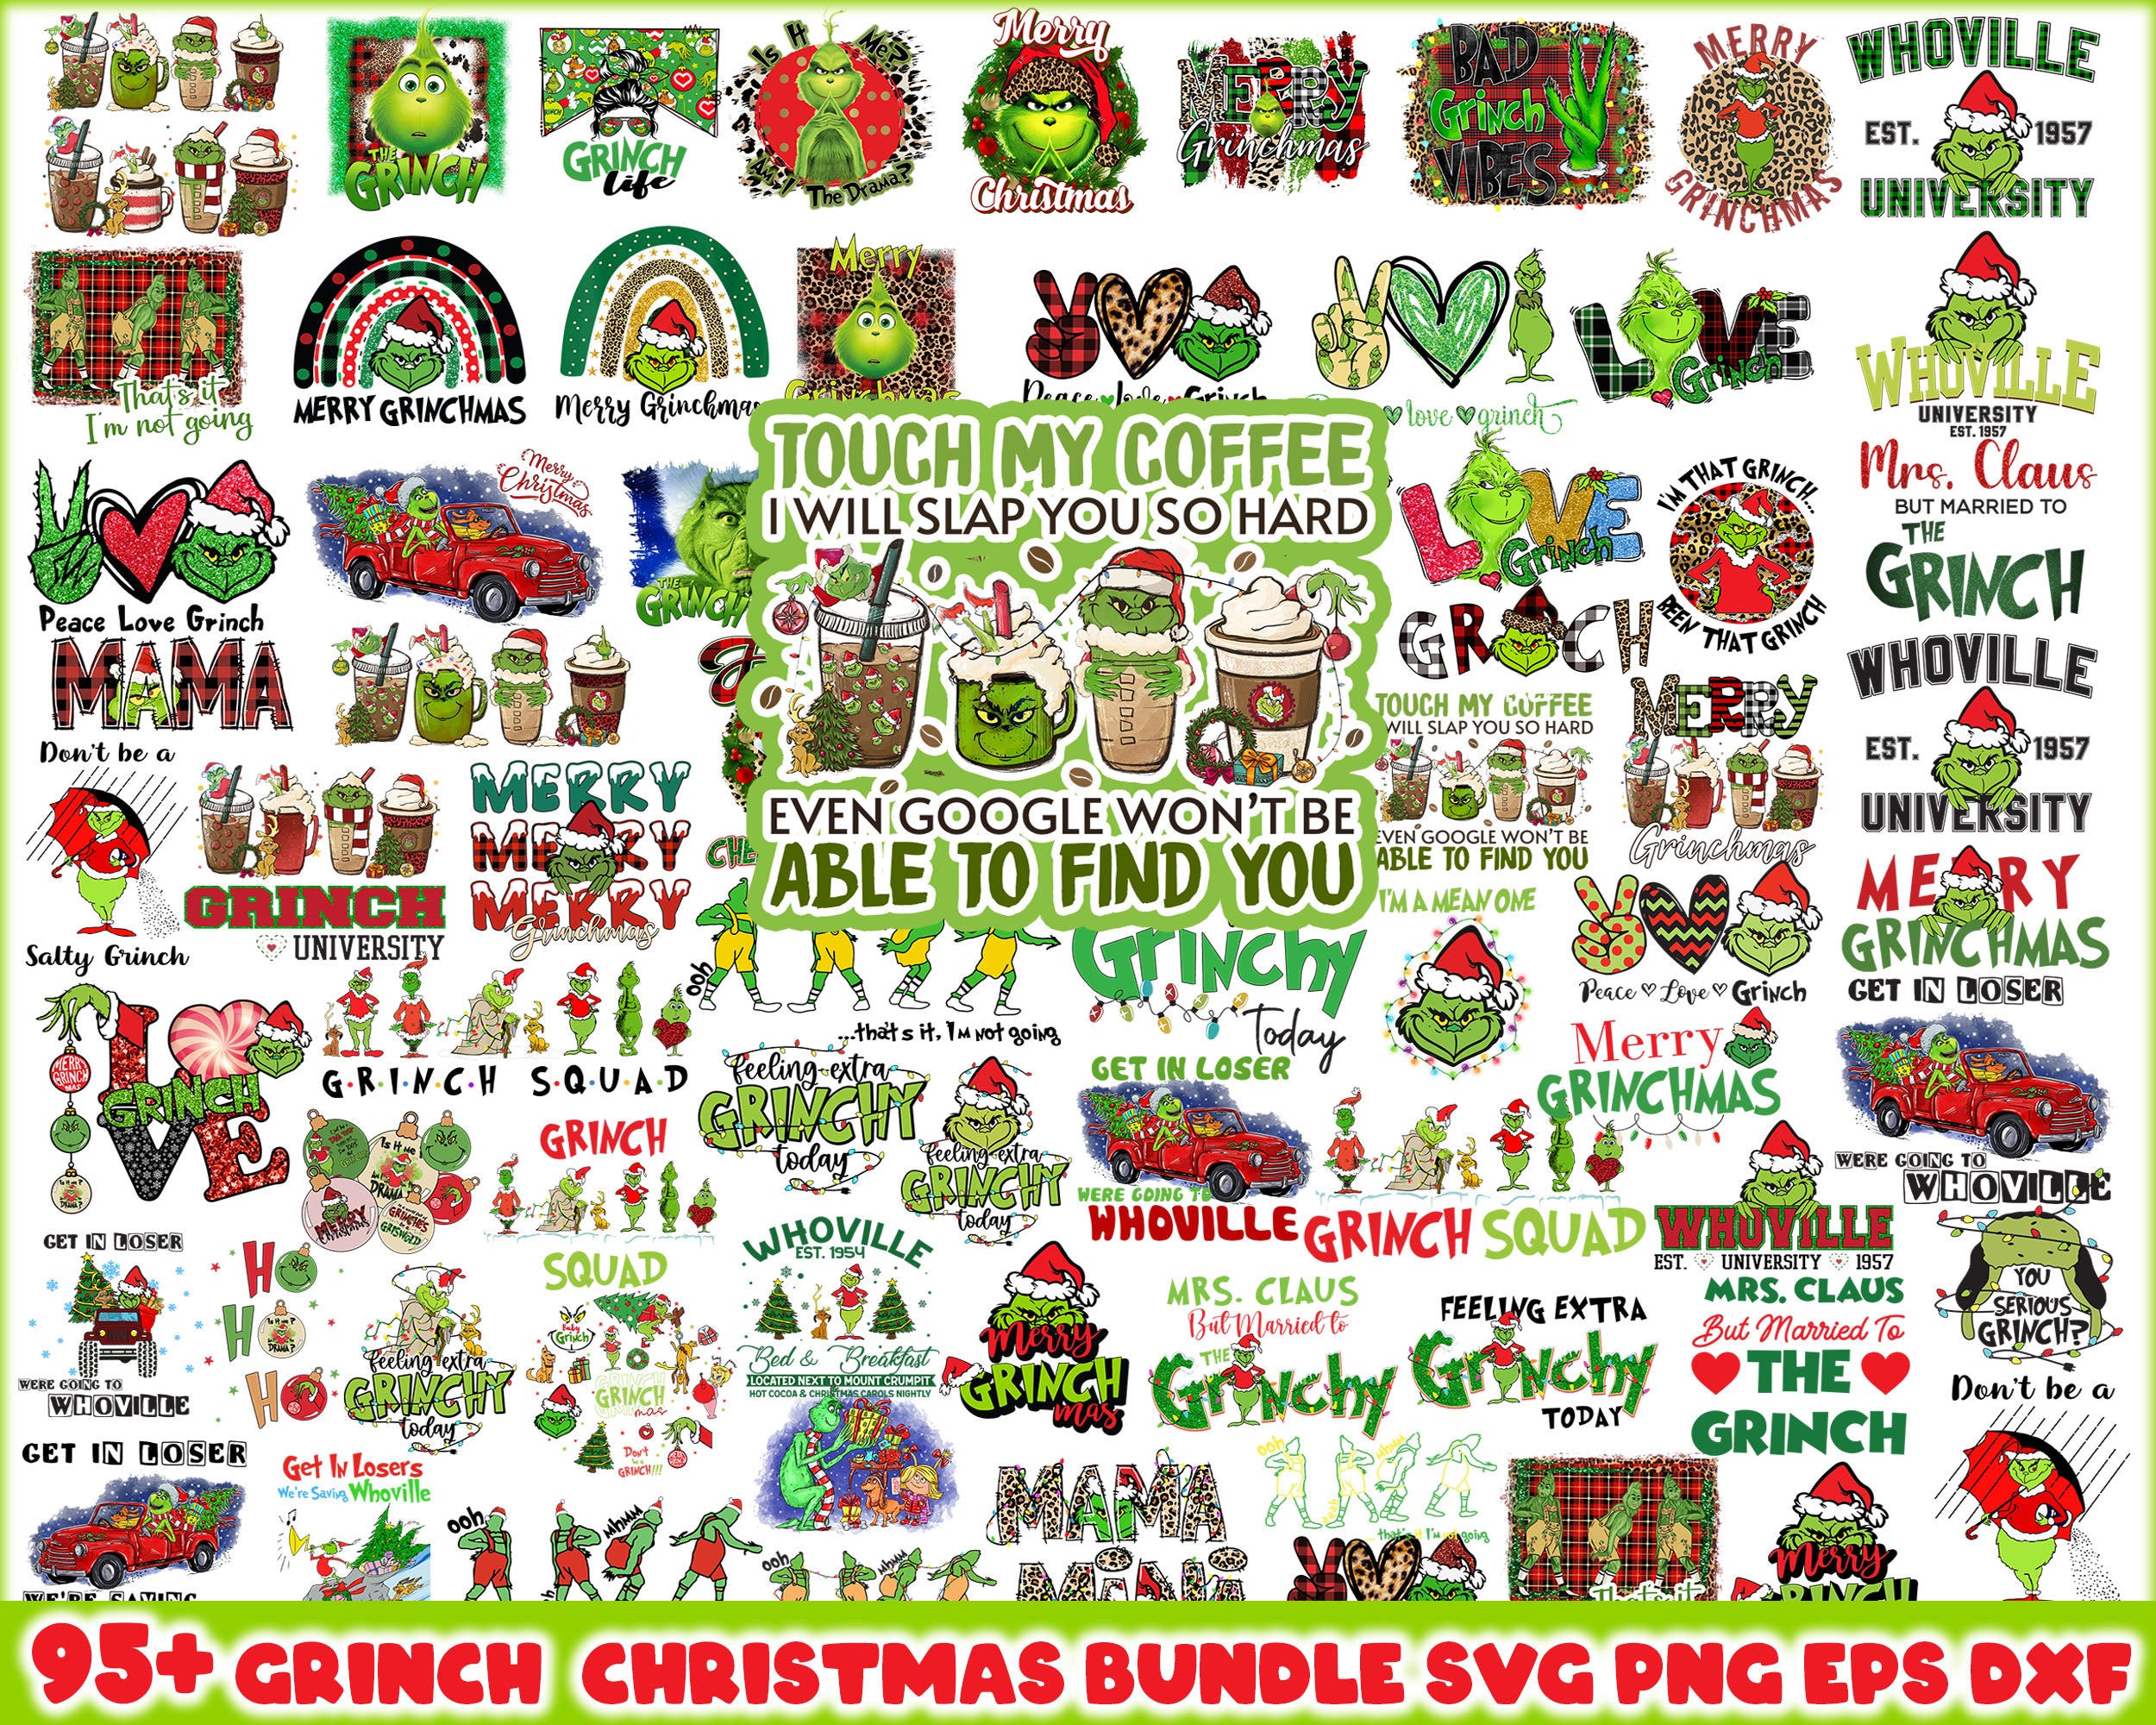 95+ Grinch Bundle SVG, Grinch SVG, Grinchmas Cutting Image, Christmas Grinch svg, png, eps, dxf  CRM24112203